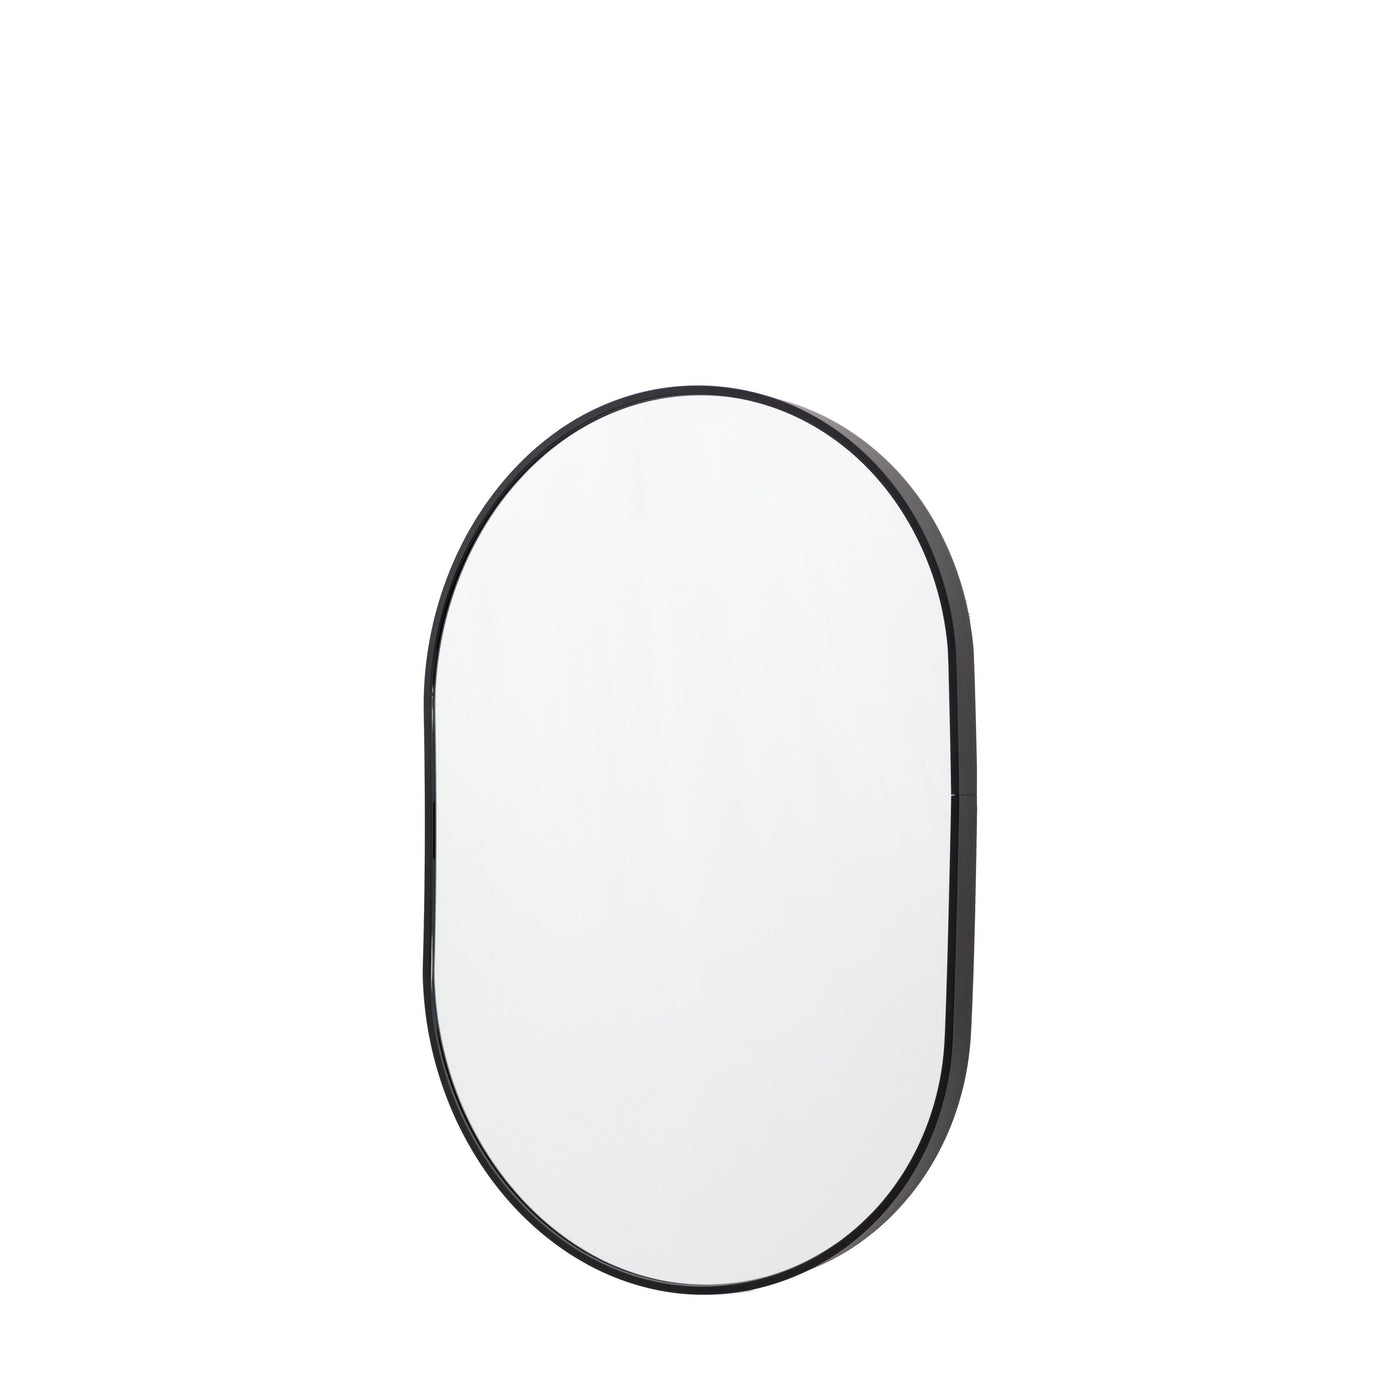 Boswyn Oval Black Mirror - Small